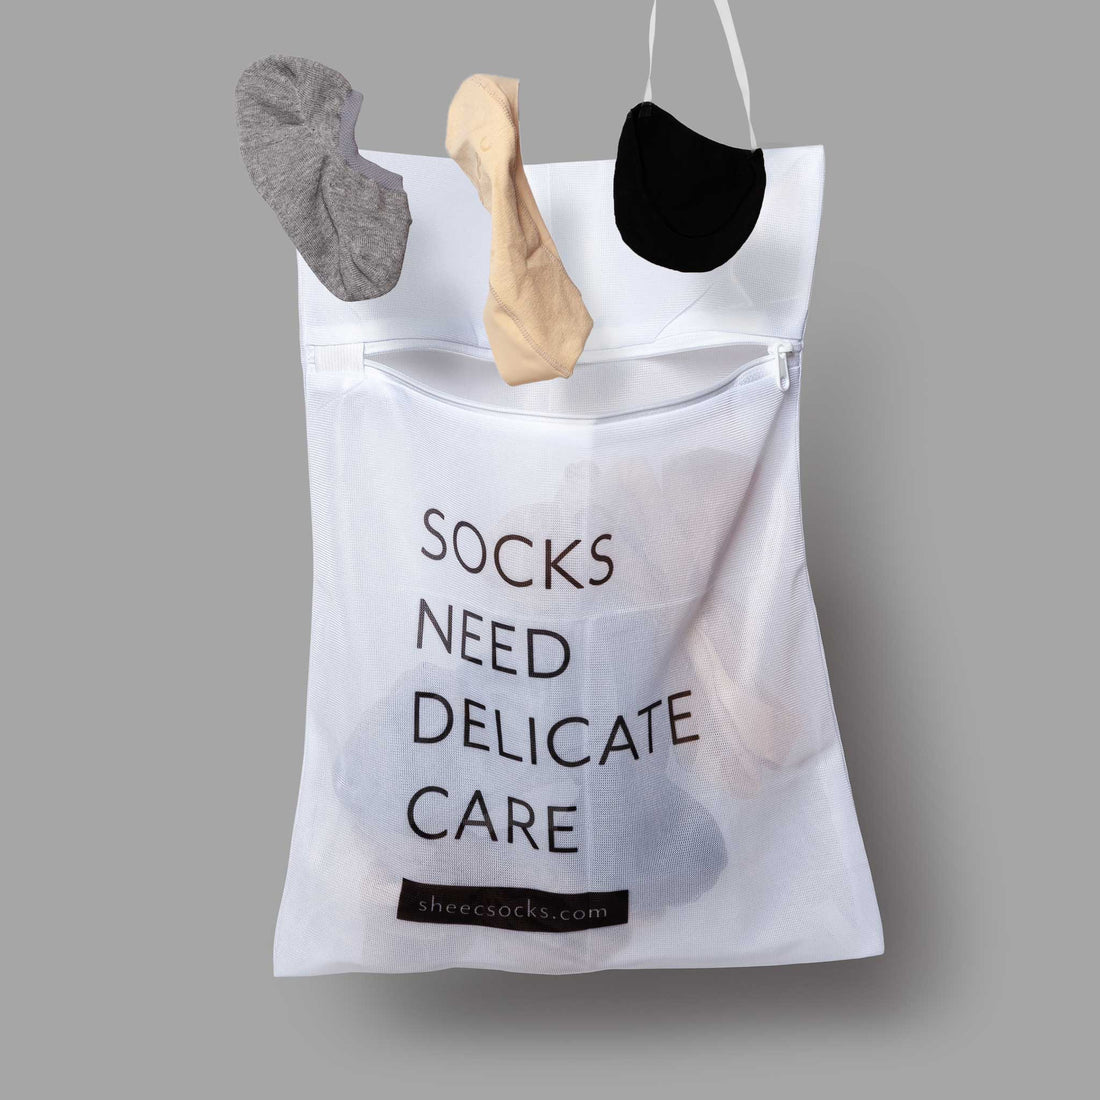 Mesh Laundry Bag for Delicates, Sock Laundry Bag